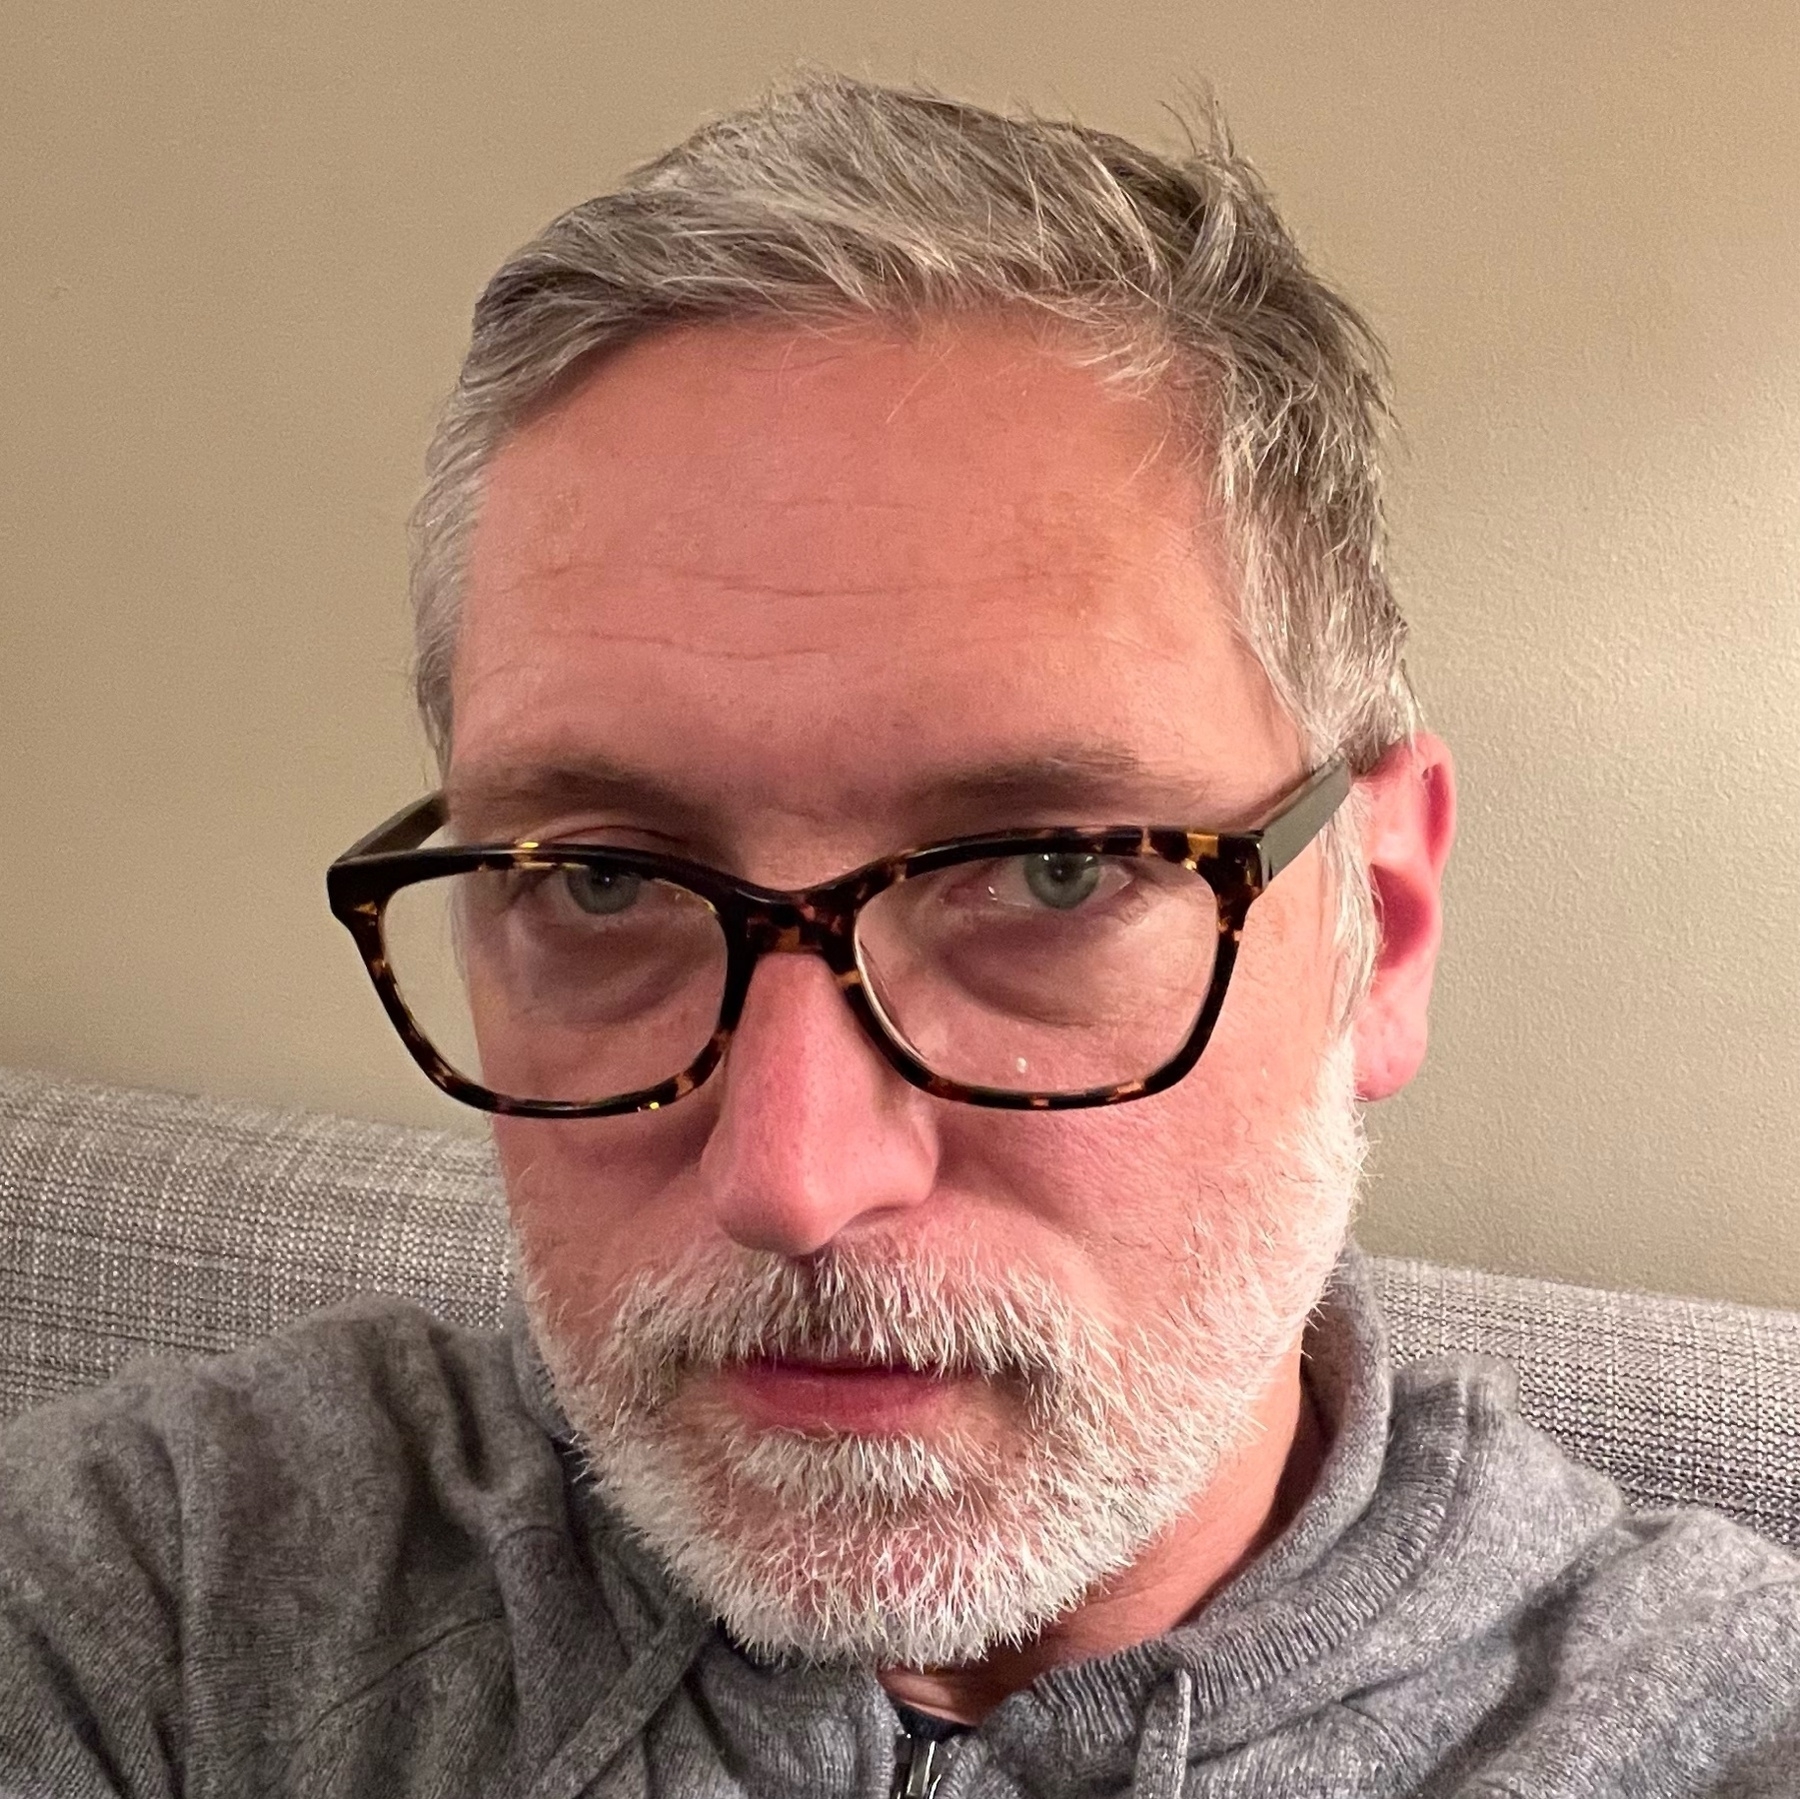 selfie slwearing a grey sweatshirt with beard and glasses